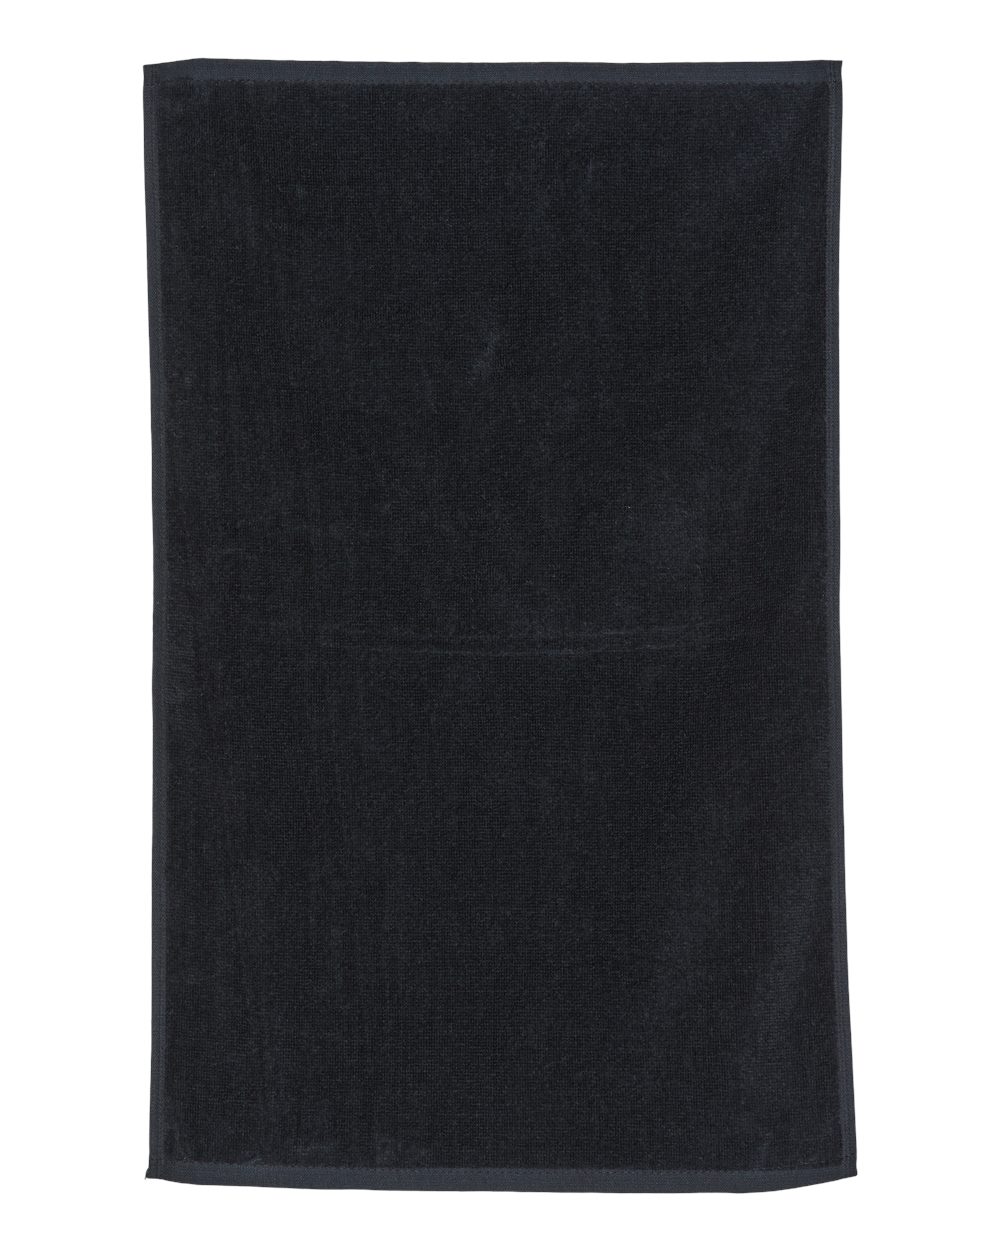 Carmel Towel Company C162523 - Golf Towel